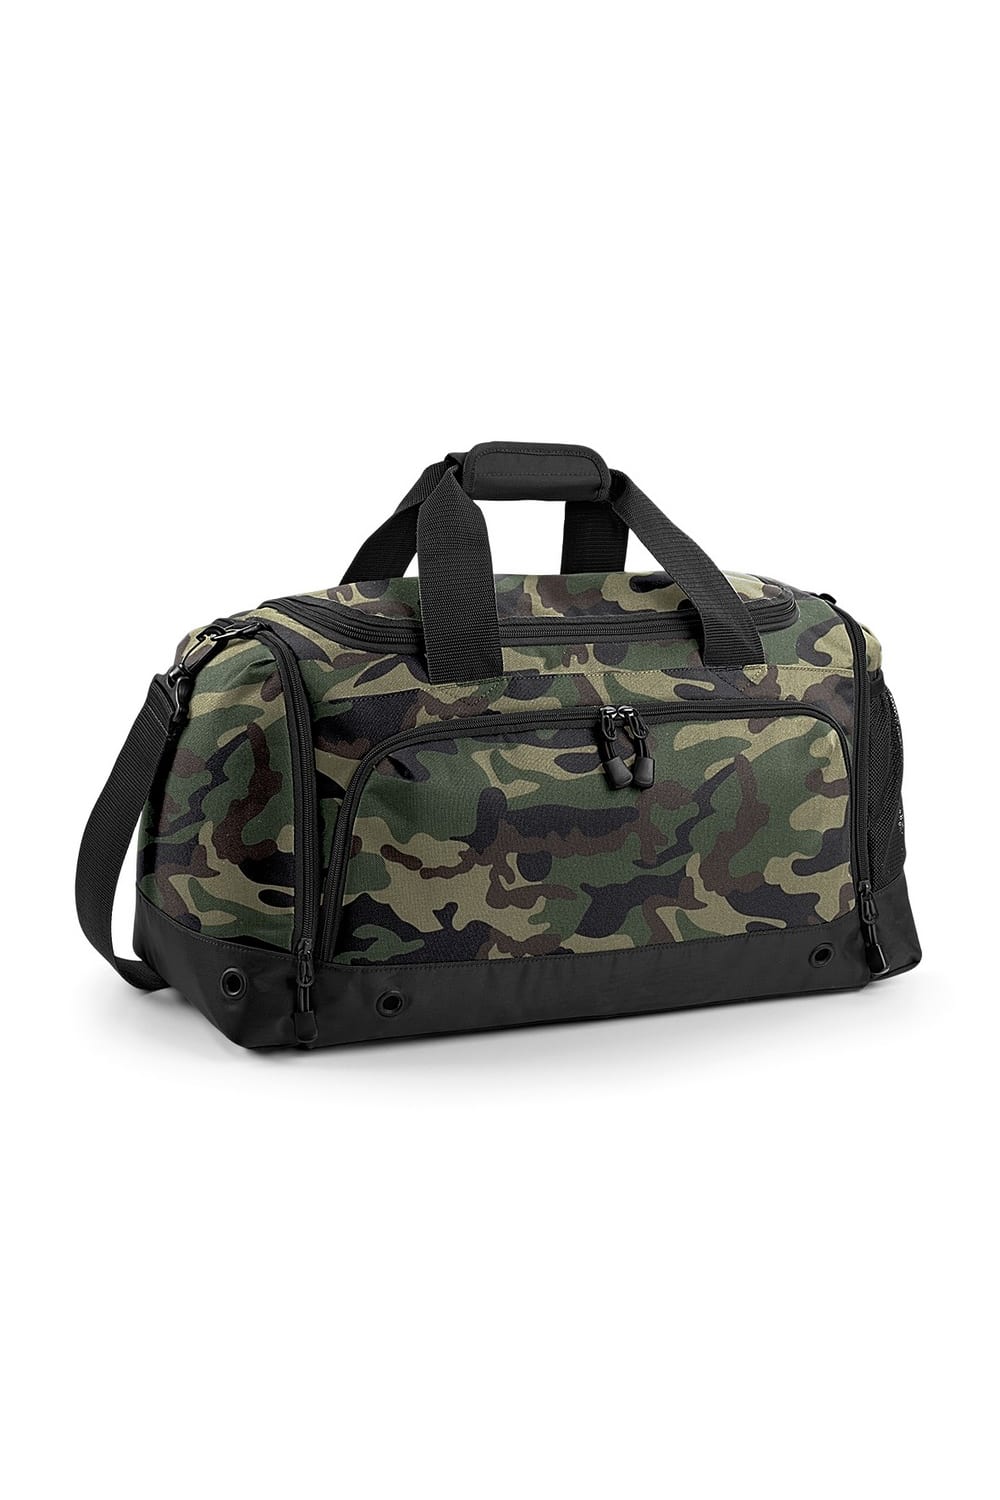 BagBase Sports Holdall / Duffel Bag (Jungle Camo) (One Size)